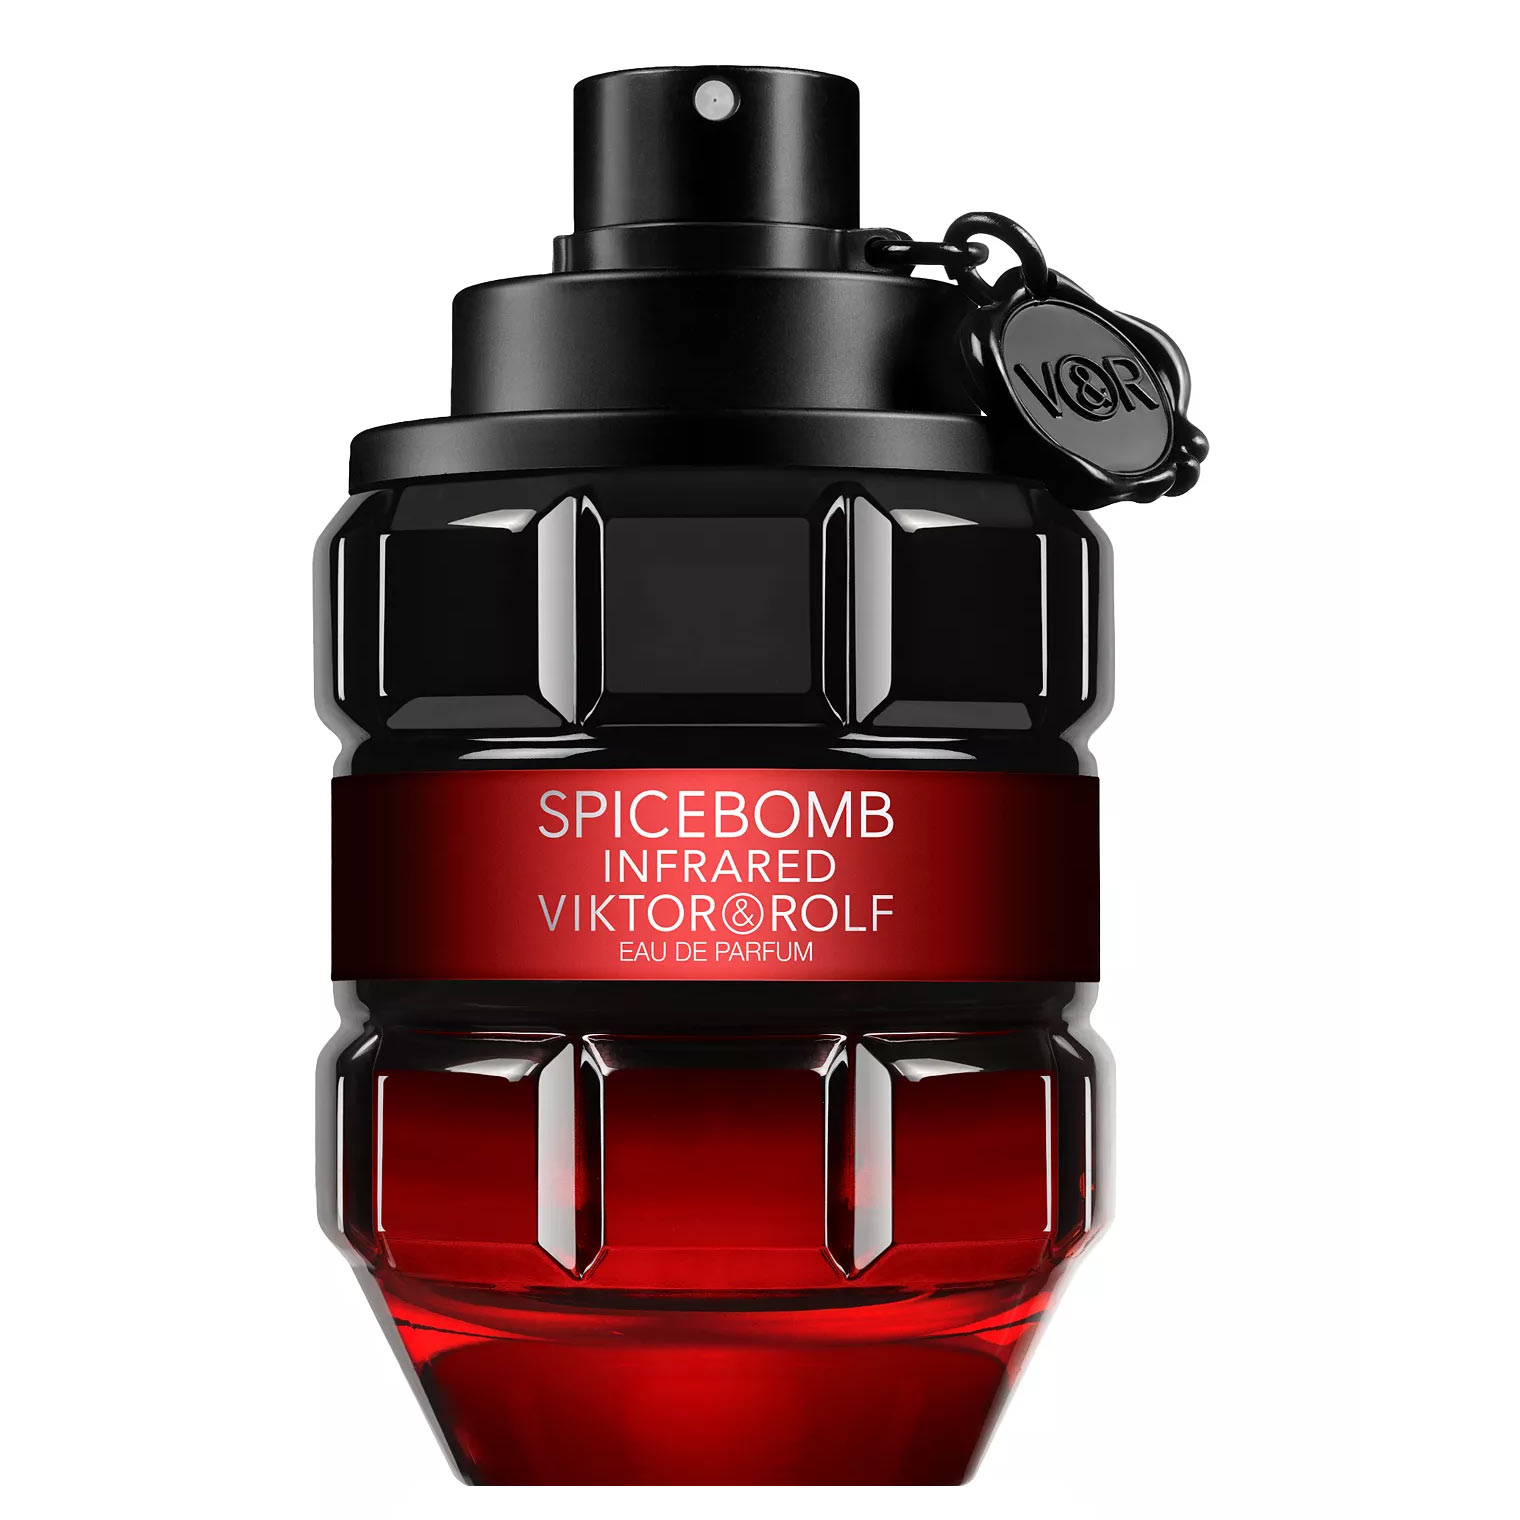 Spicebomb Infrared Eau de Parfum Viktor & Rolf Image